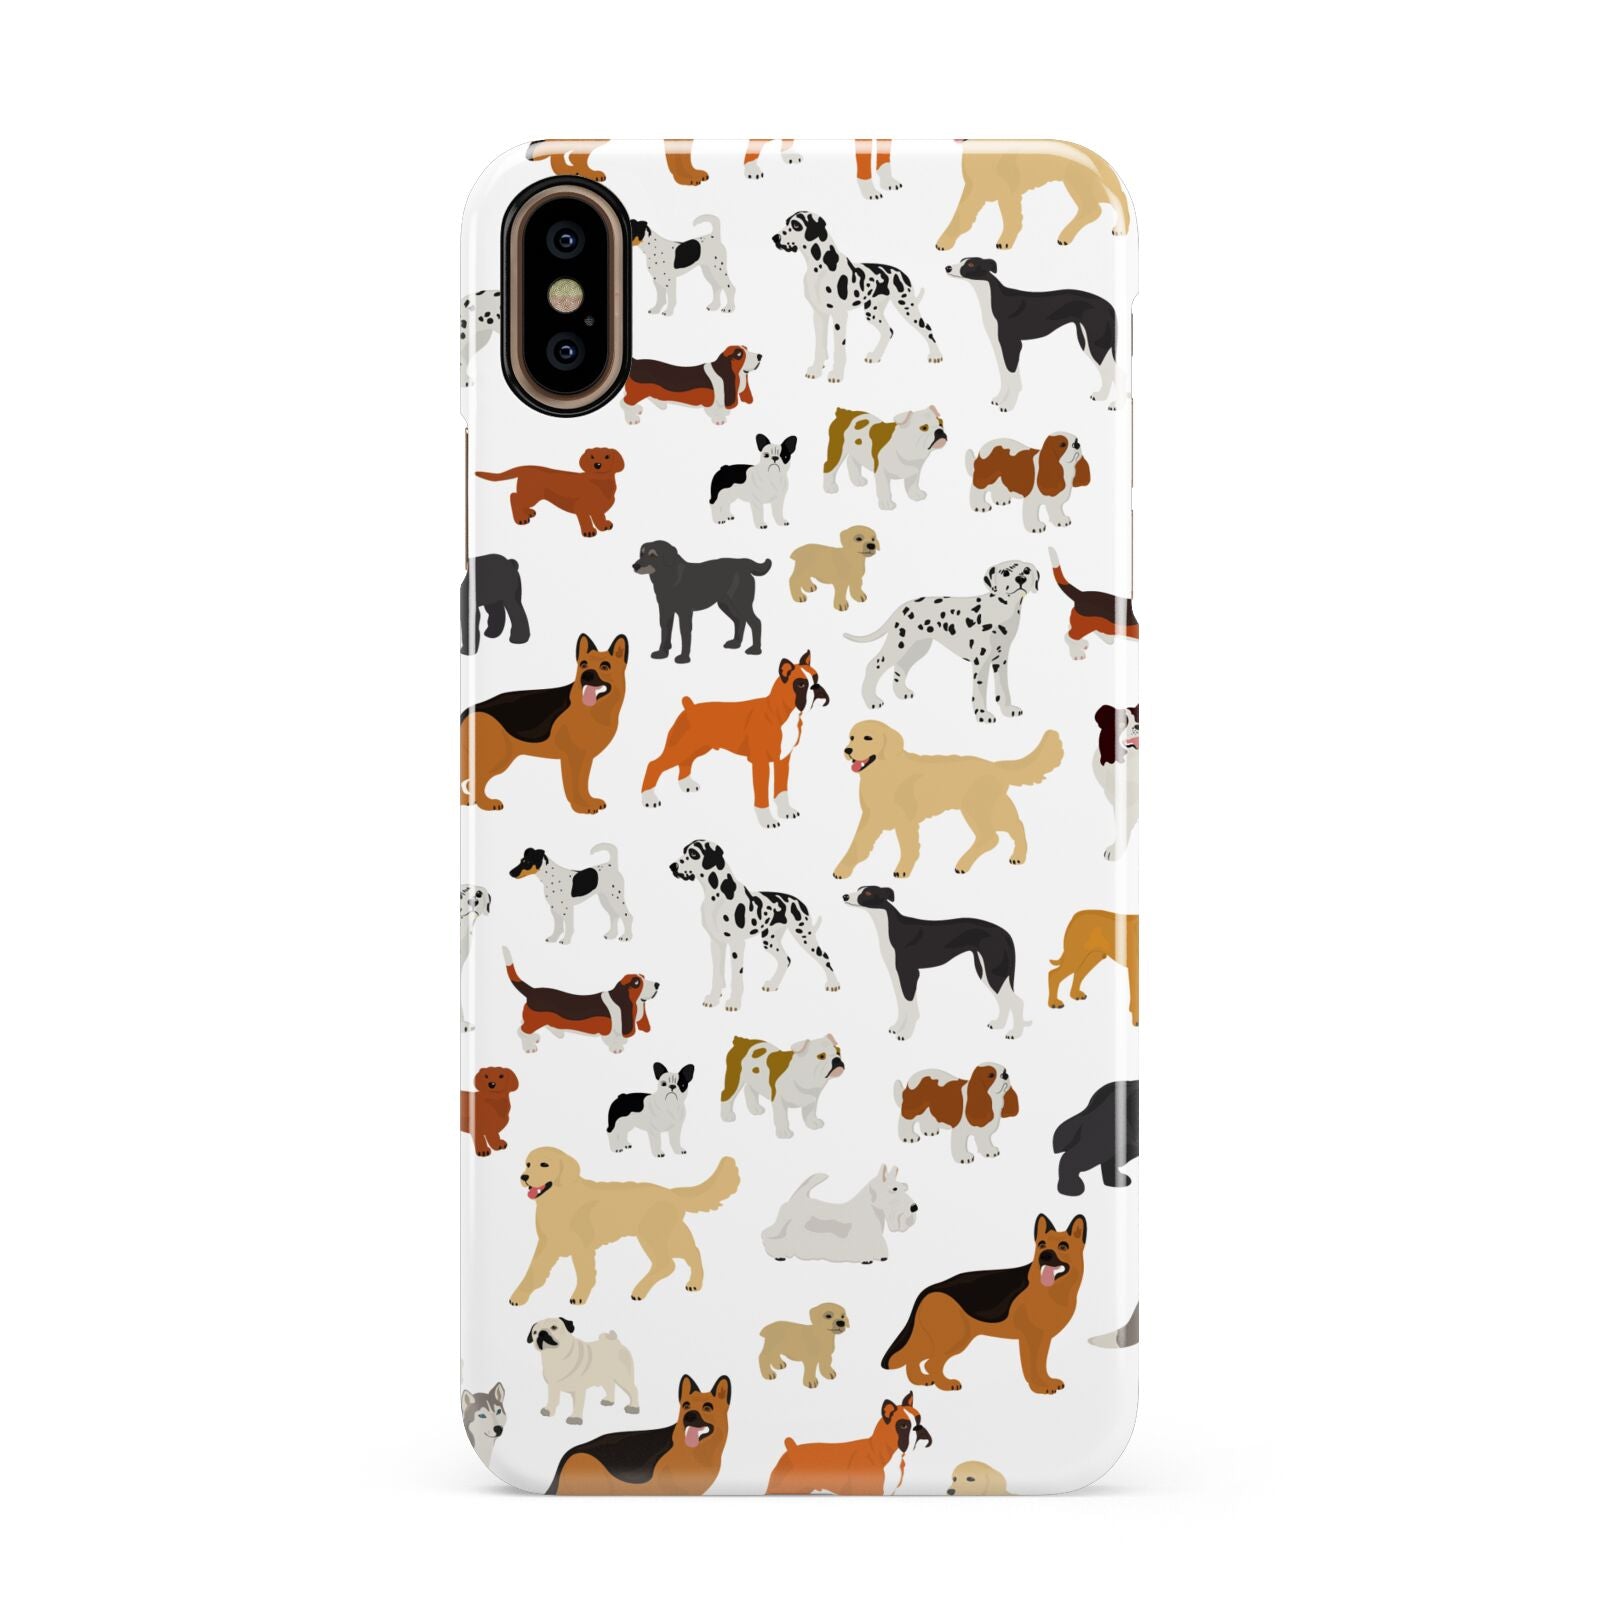 Dog Illustration Apple iPhone Xs Max 3D Snap Case